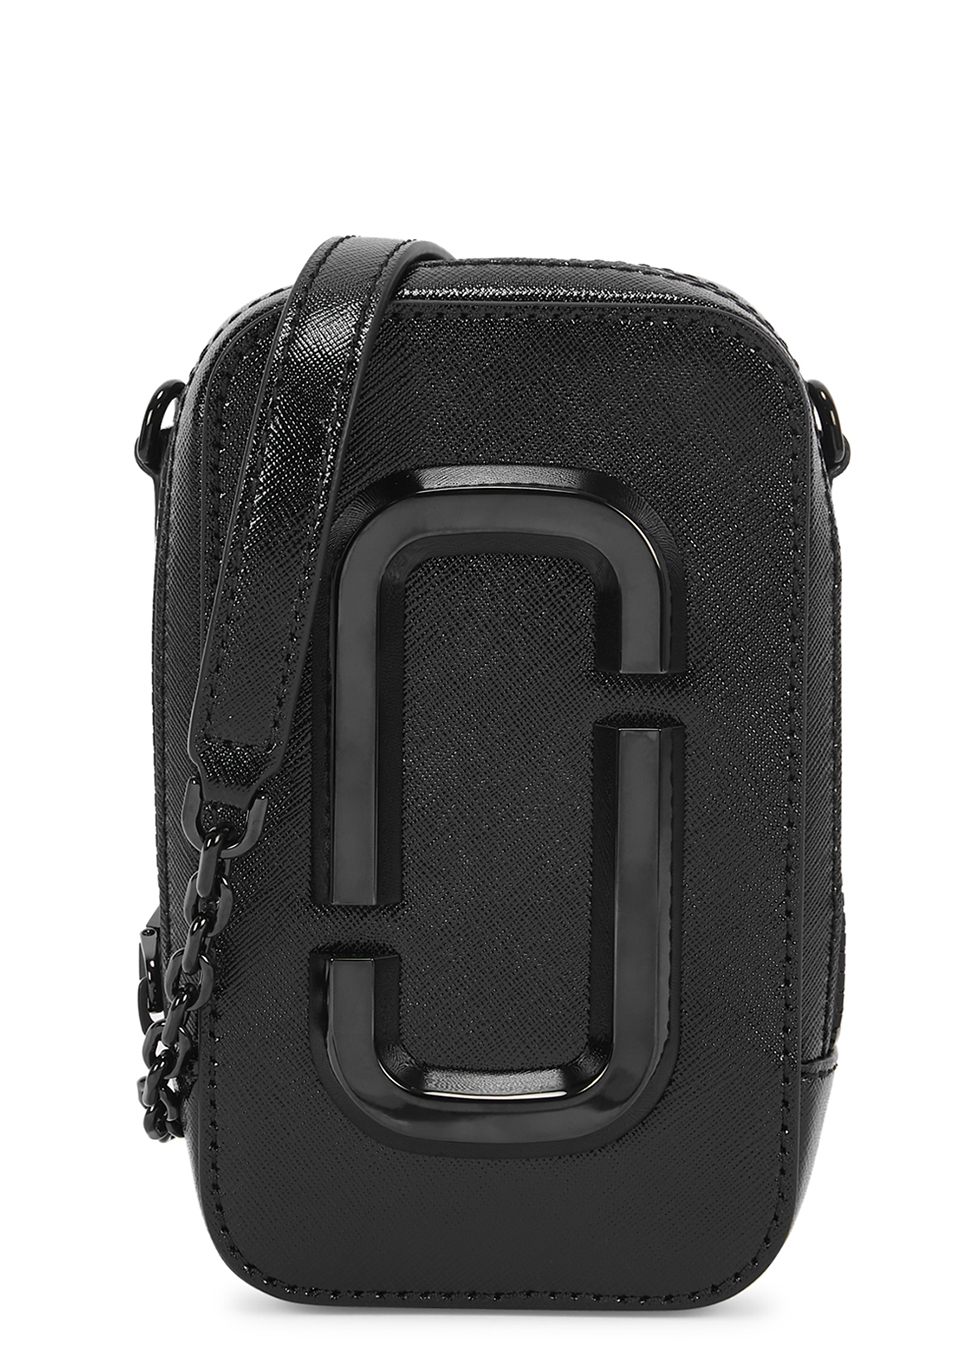 The Hot Shot DTM black leather cross-body bag